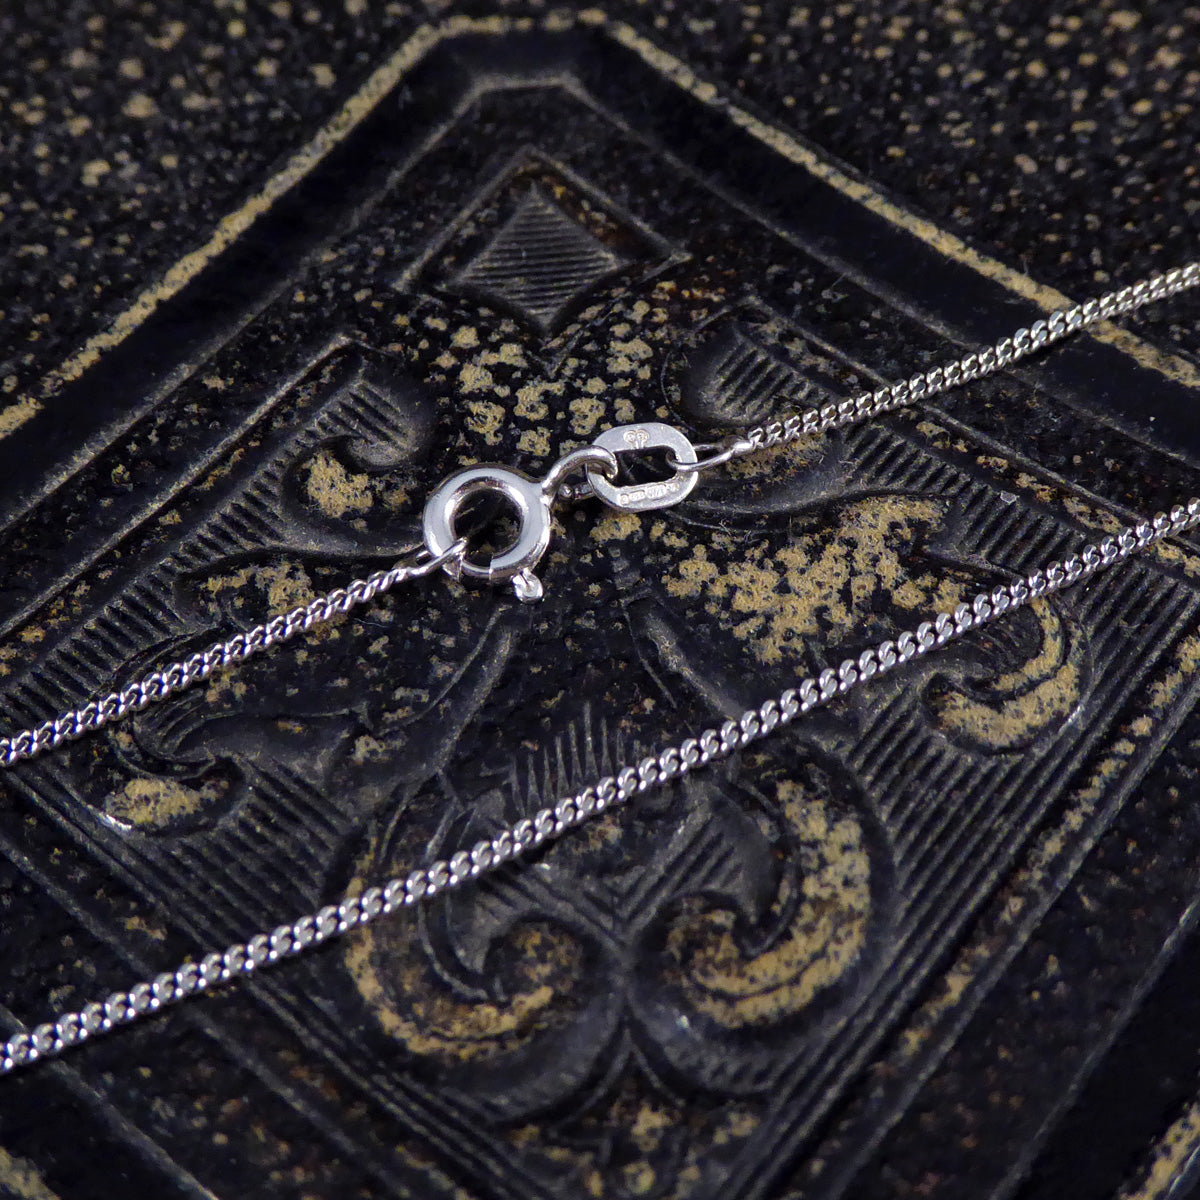 0.50ct Diamond Solitaire Pendant Necklace in 18ct White Gold